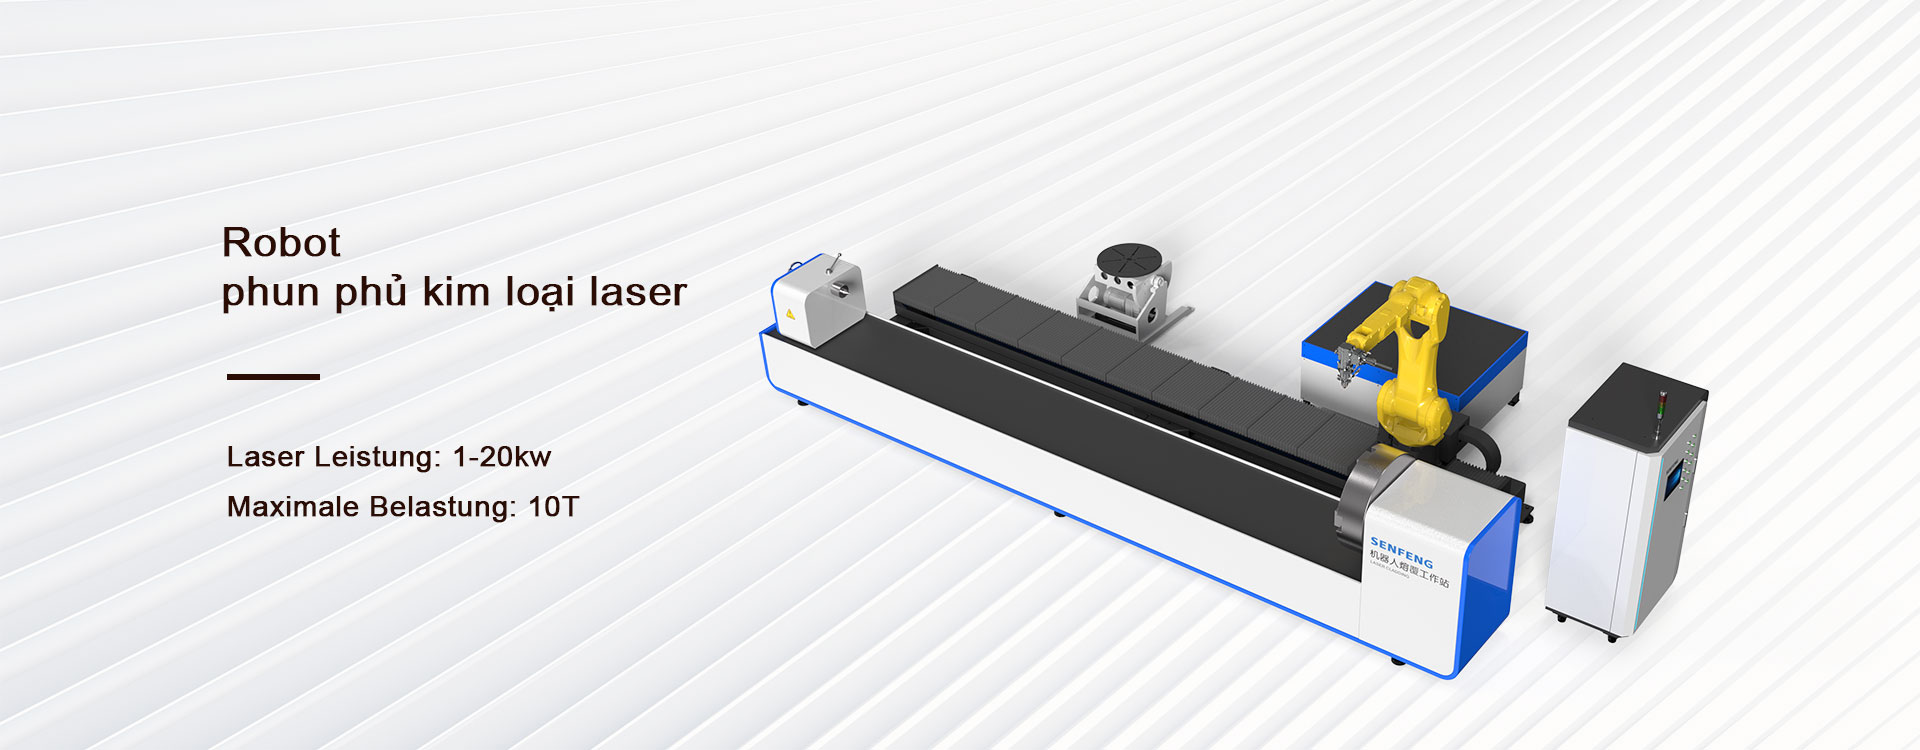 Robot phun phủ kim loại laser